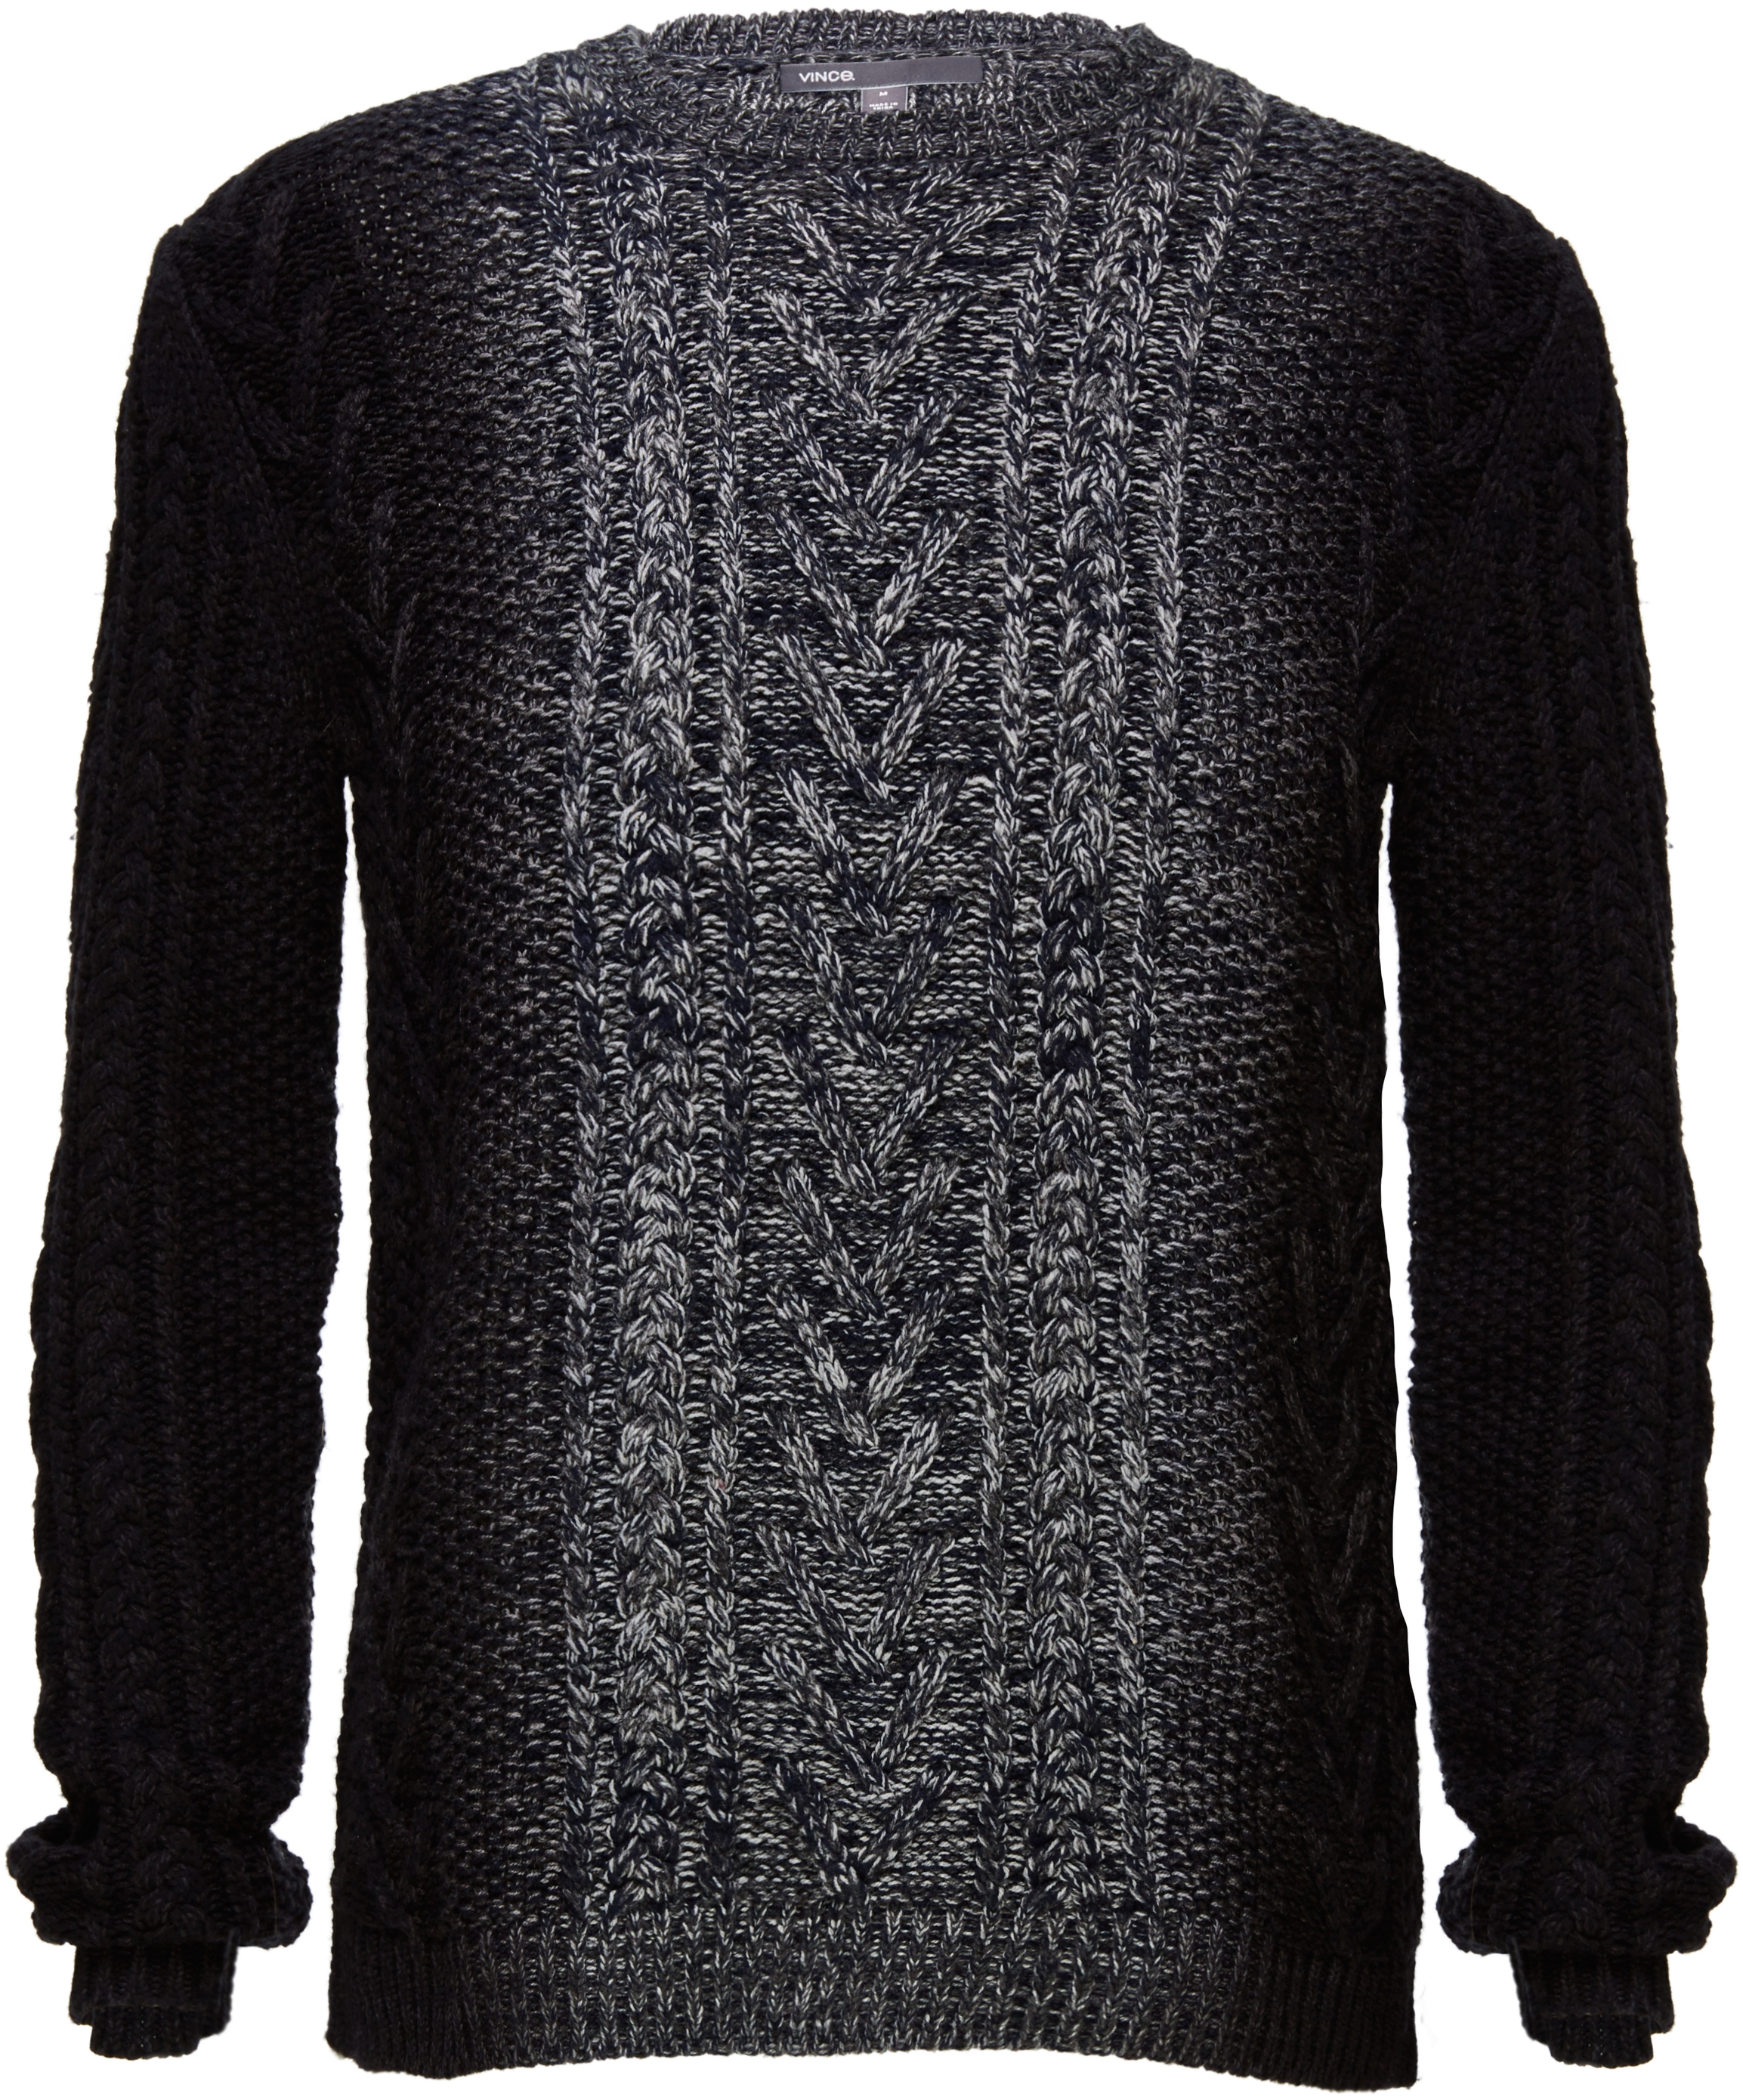 VINCE Wool Cashmere Marled Cable Knit Dégradé Crew Neck Sweater, $395